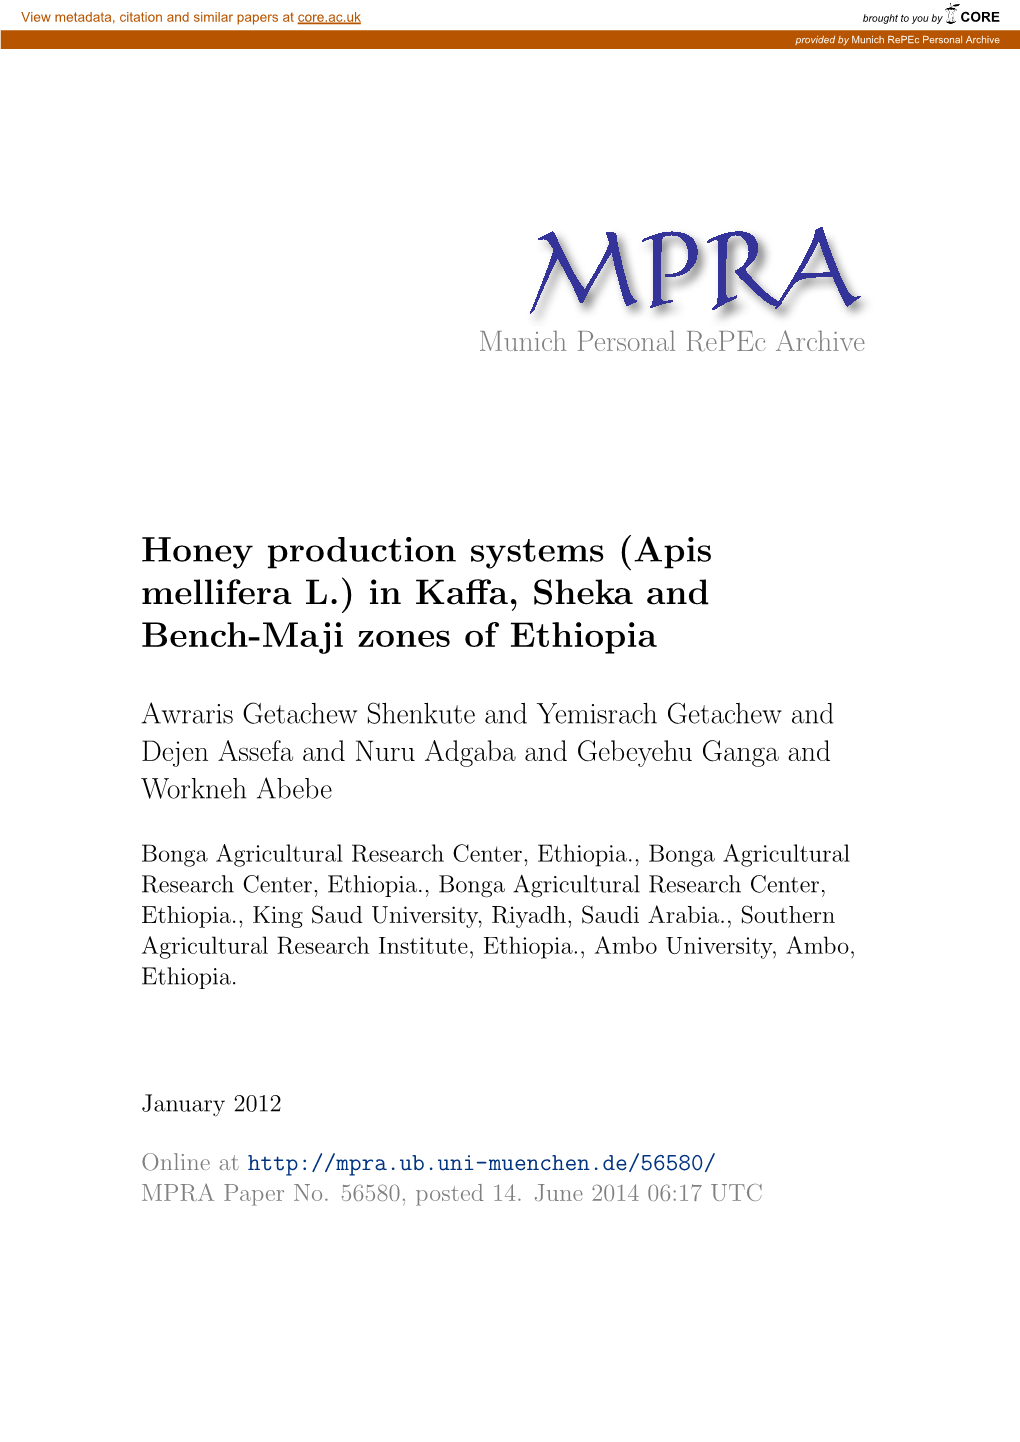 Honey Production Systems (Apis Mellifera L.) in Kaﬀa, Sheka and Bench-Maji Zones of Ethiopia